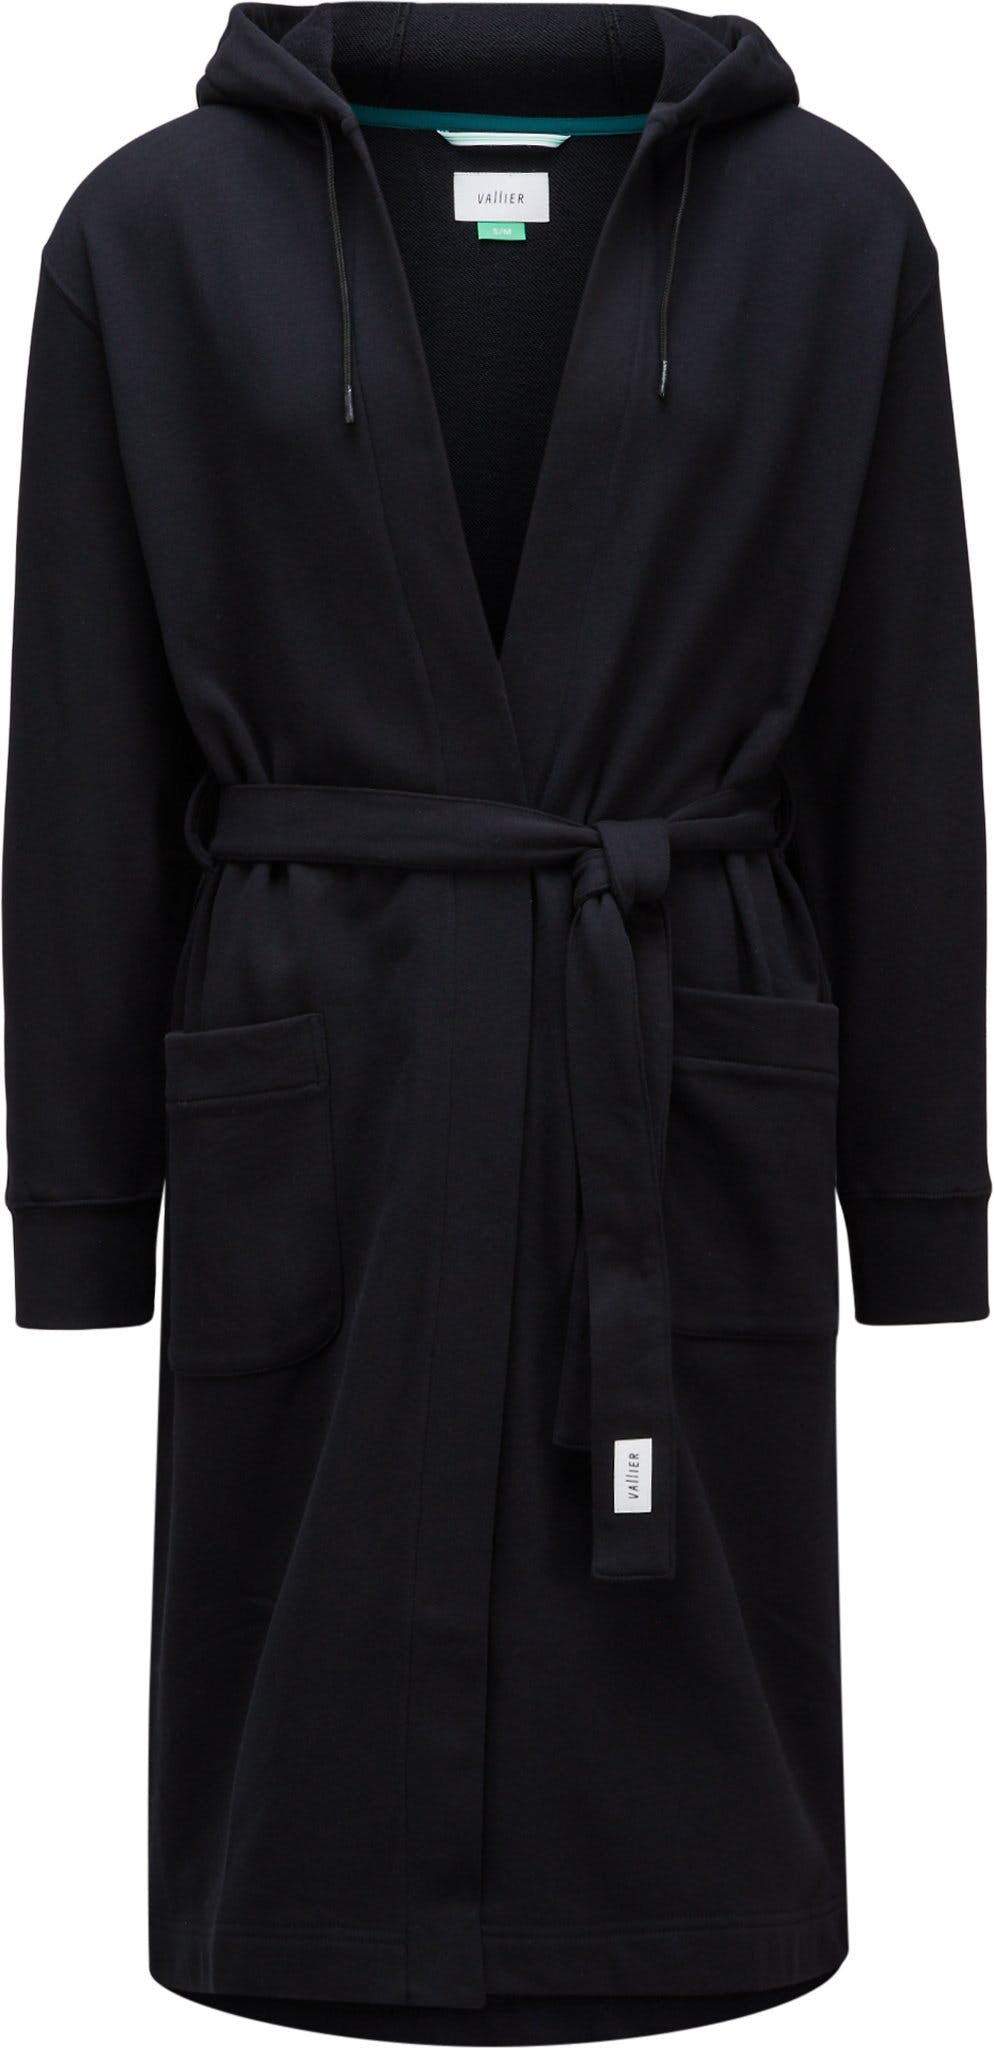 Product image for Ossington Hooded Robe - Unisex